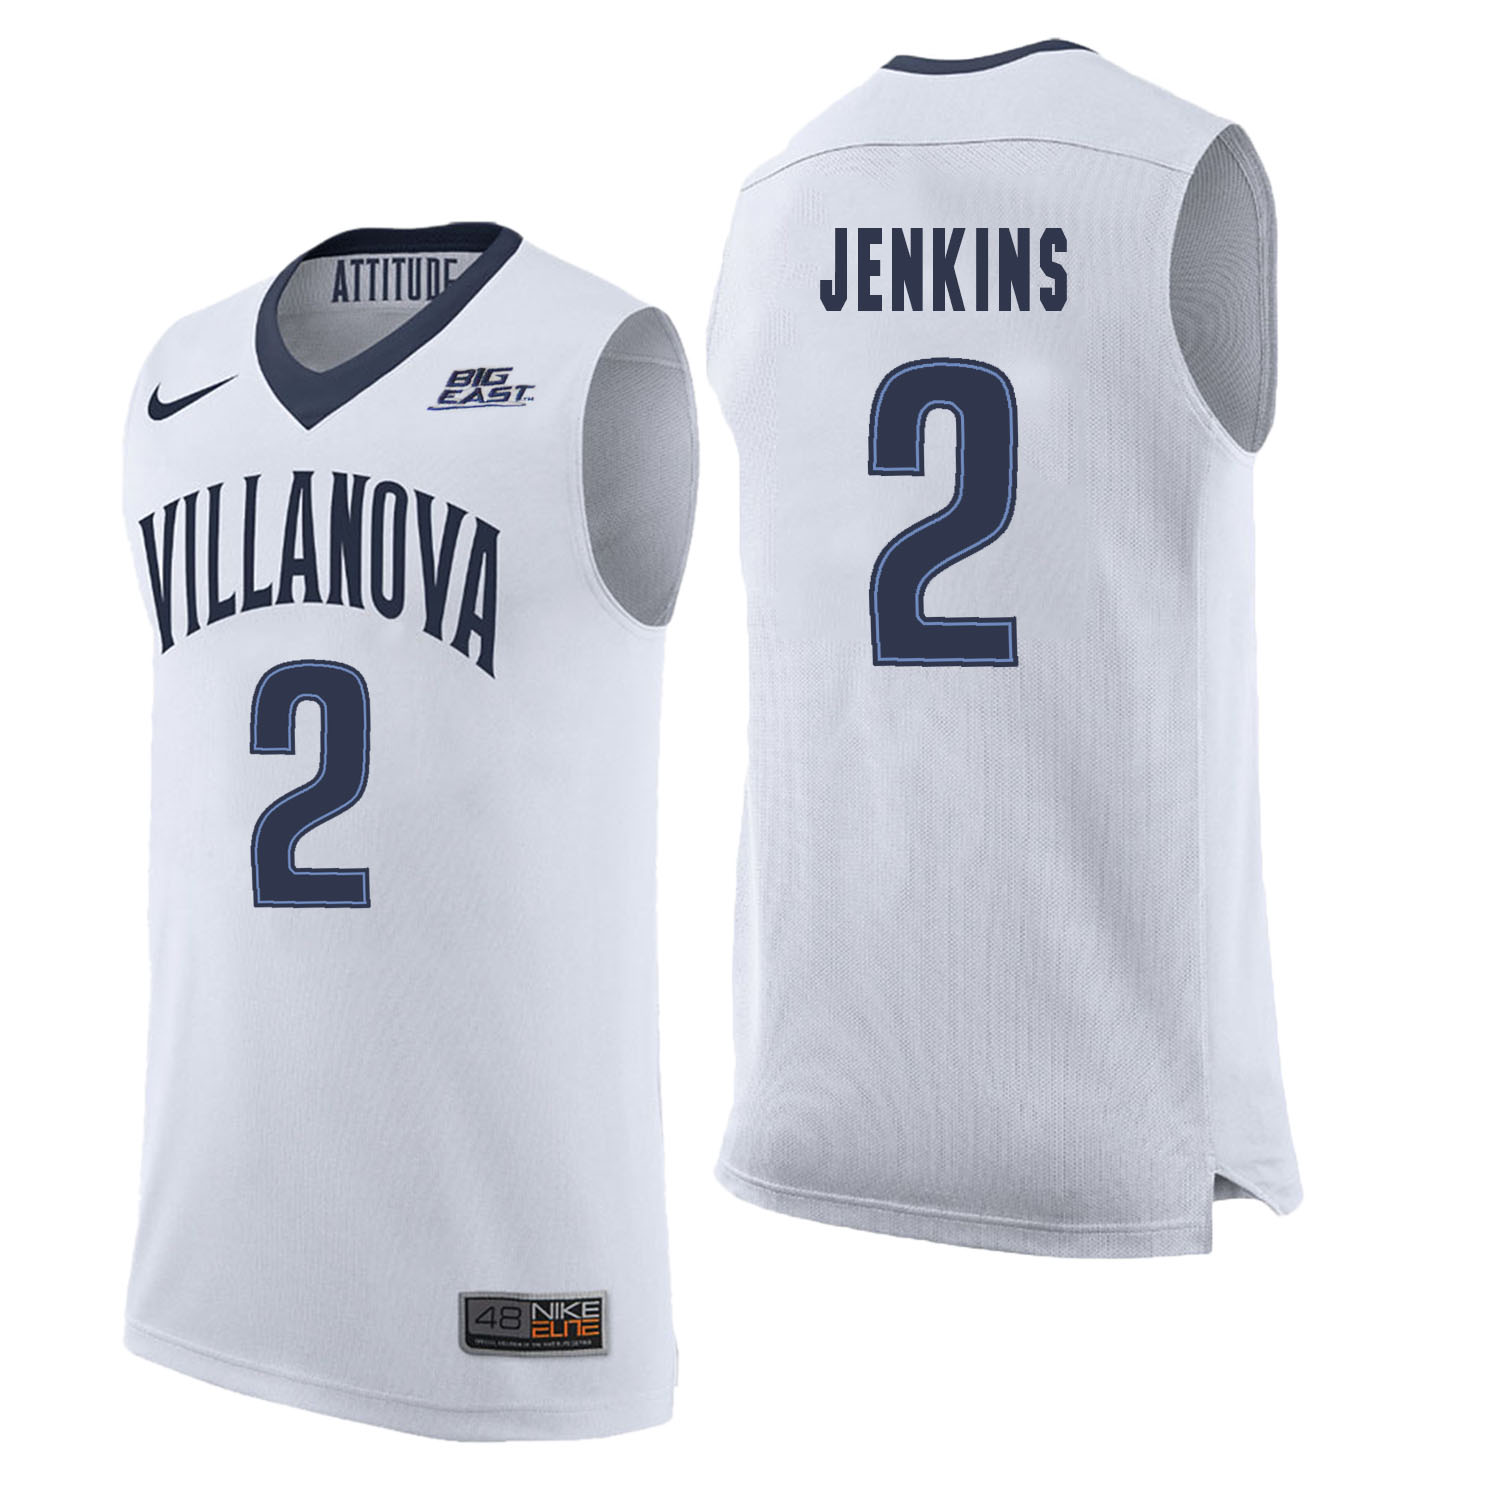 Villanova Wildcats 2 Kris Jenkins White College Basketball Elite Jersey